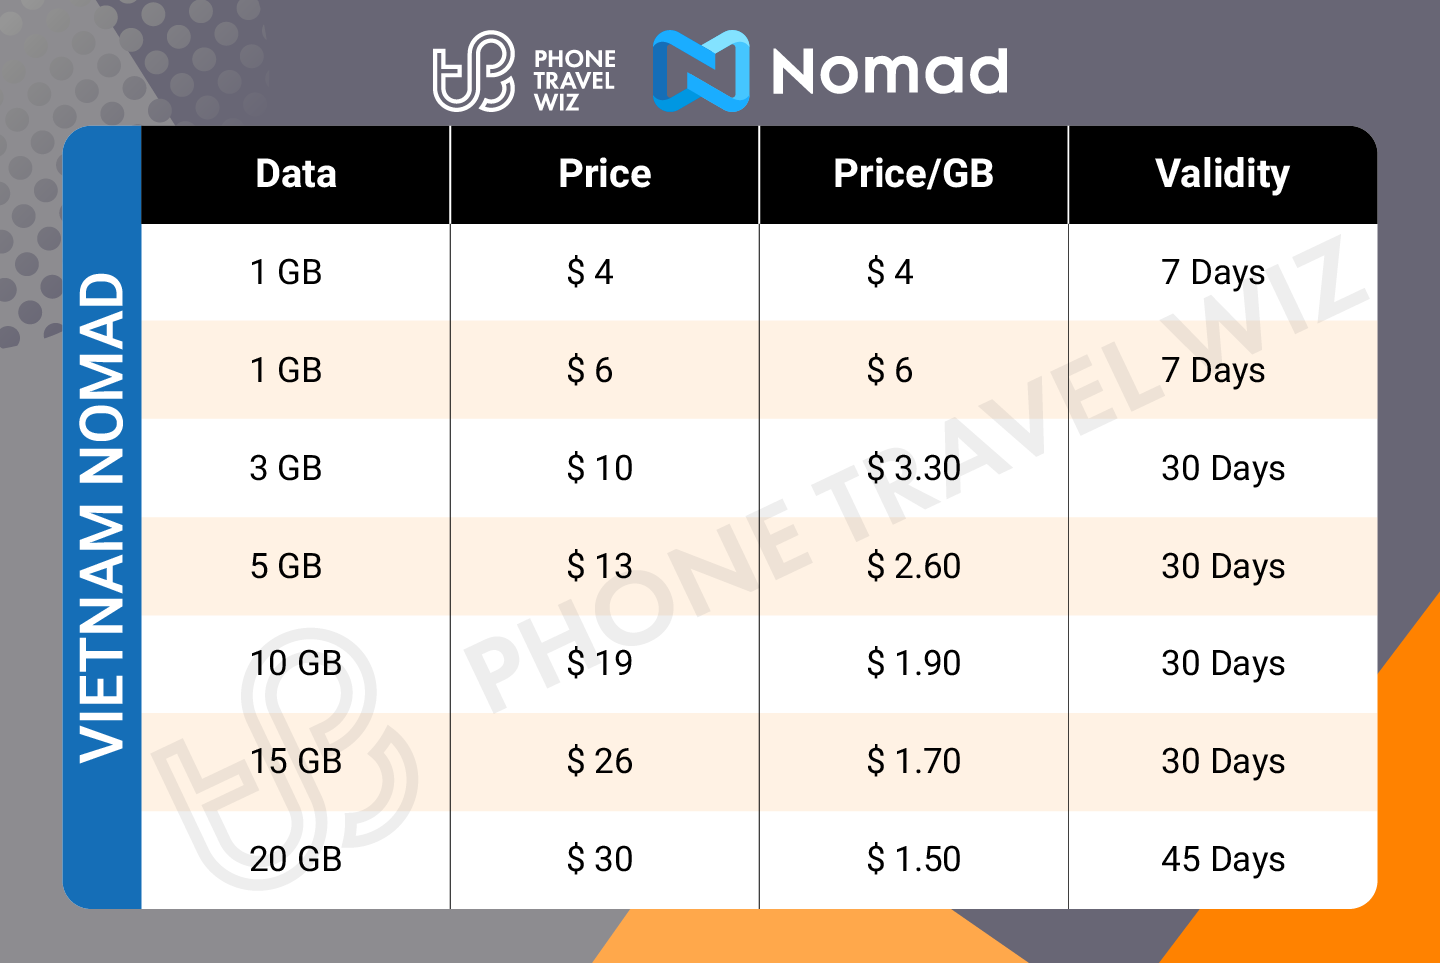 Nomad Vietnam eSIM Price & Data Details Infographic by Phone Travel Wiz